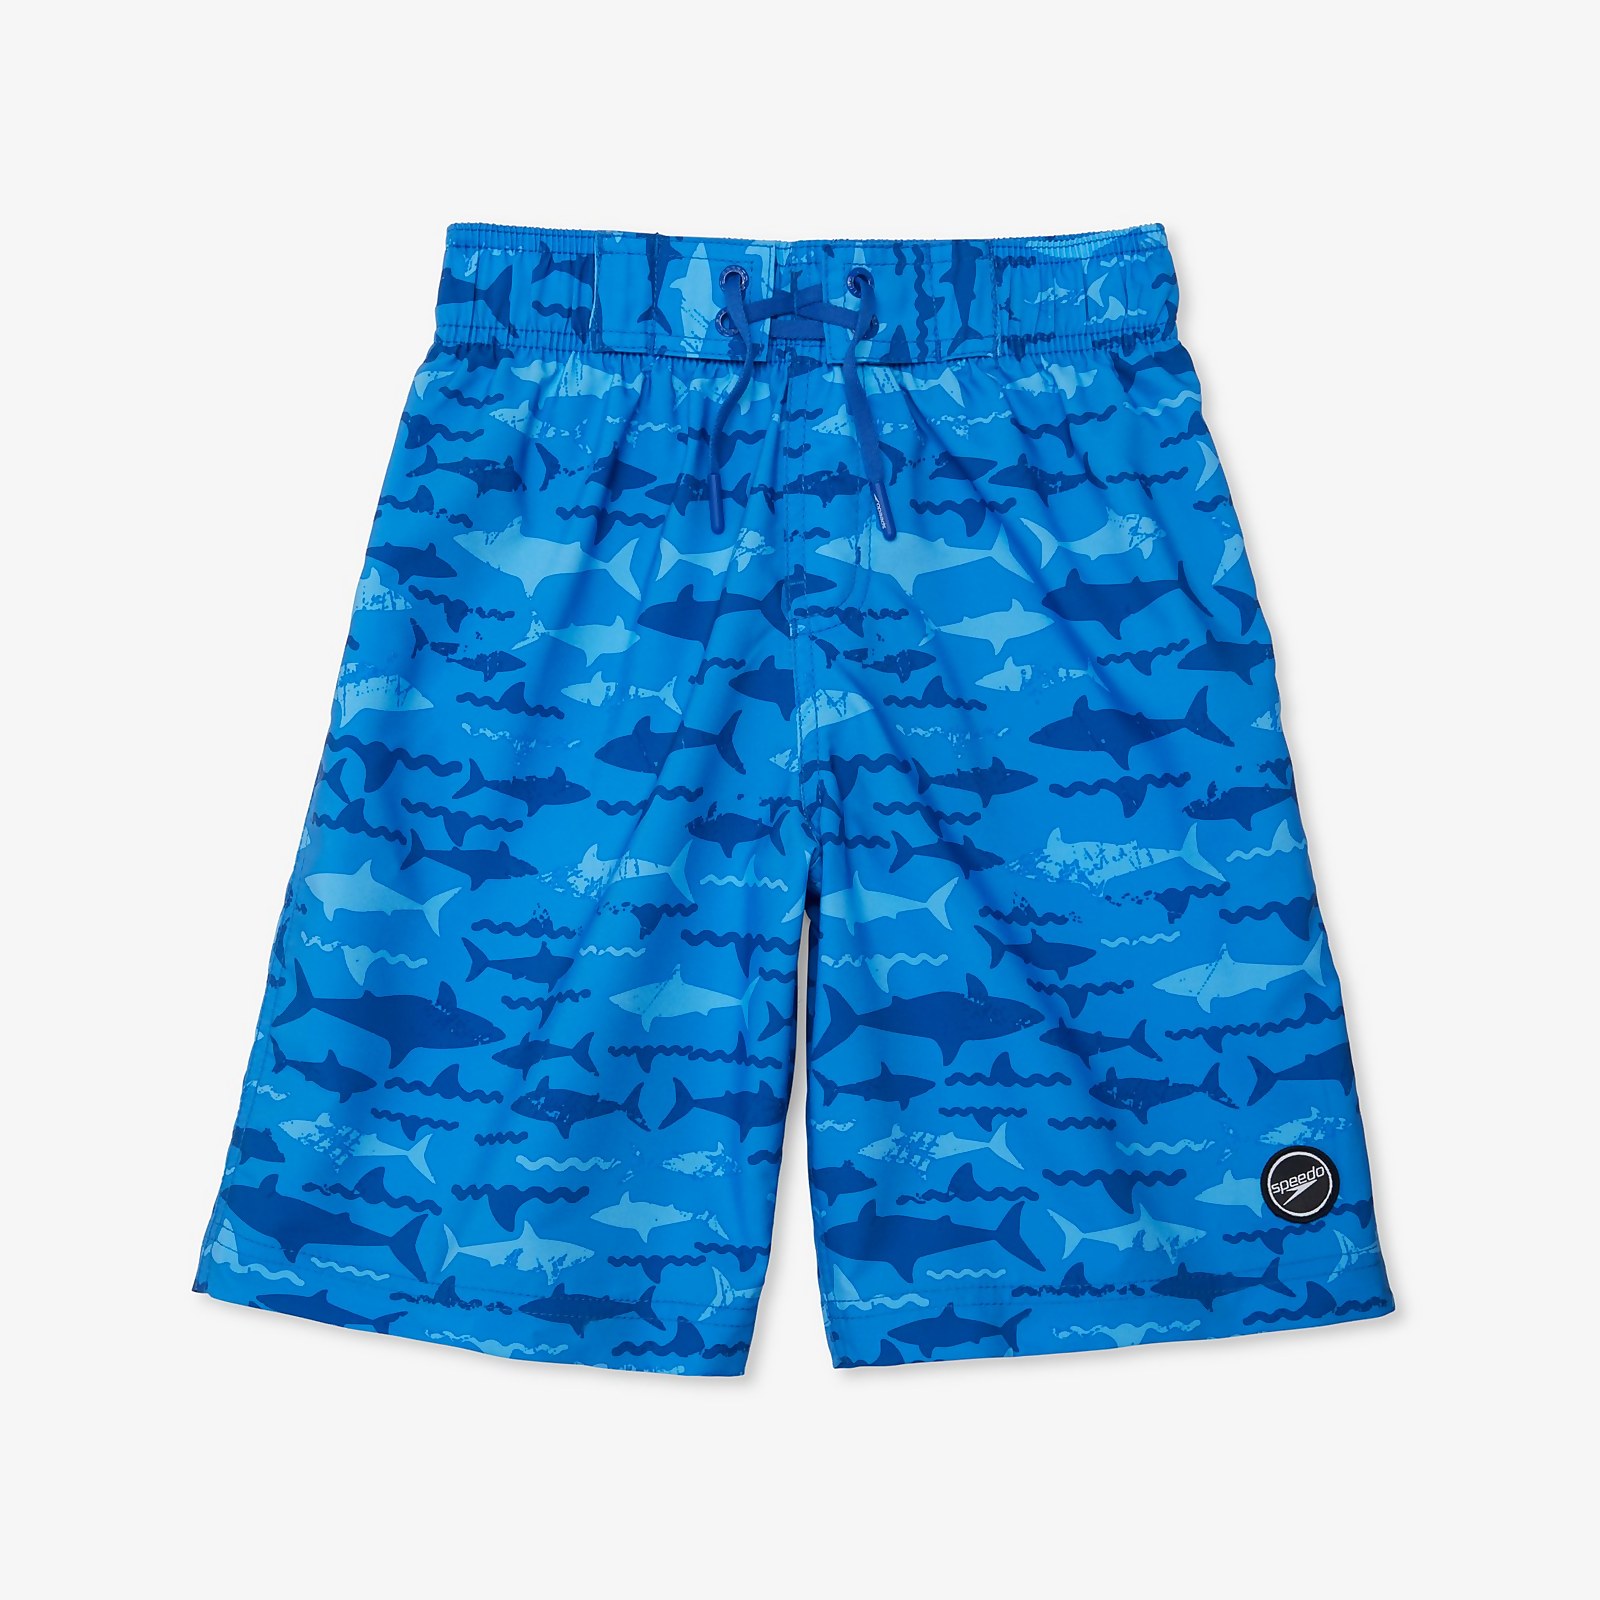 Speedo  Shark Printed Boardshort 17" - S    : Blue